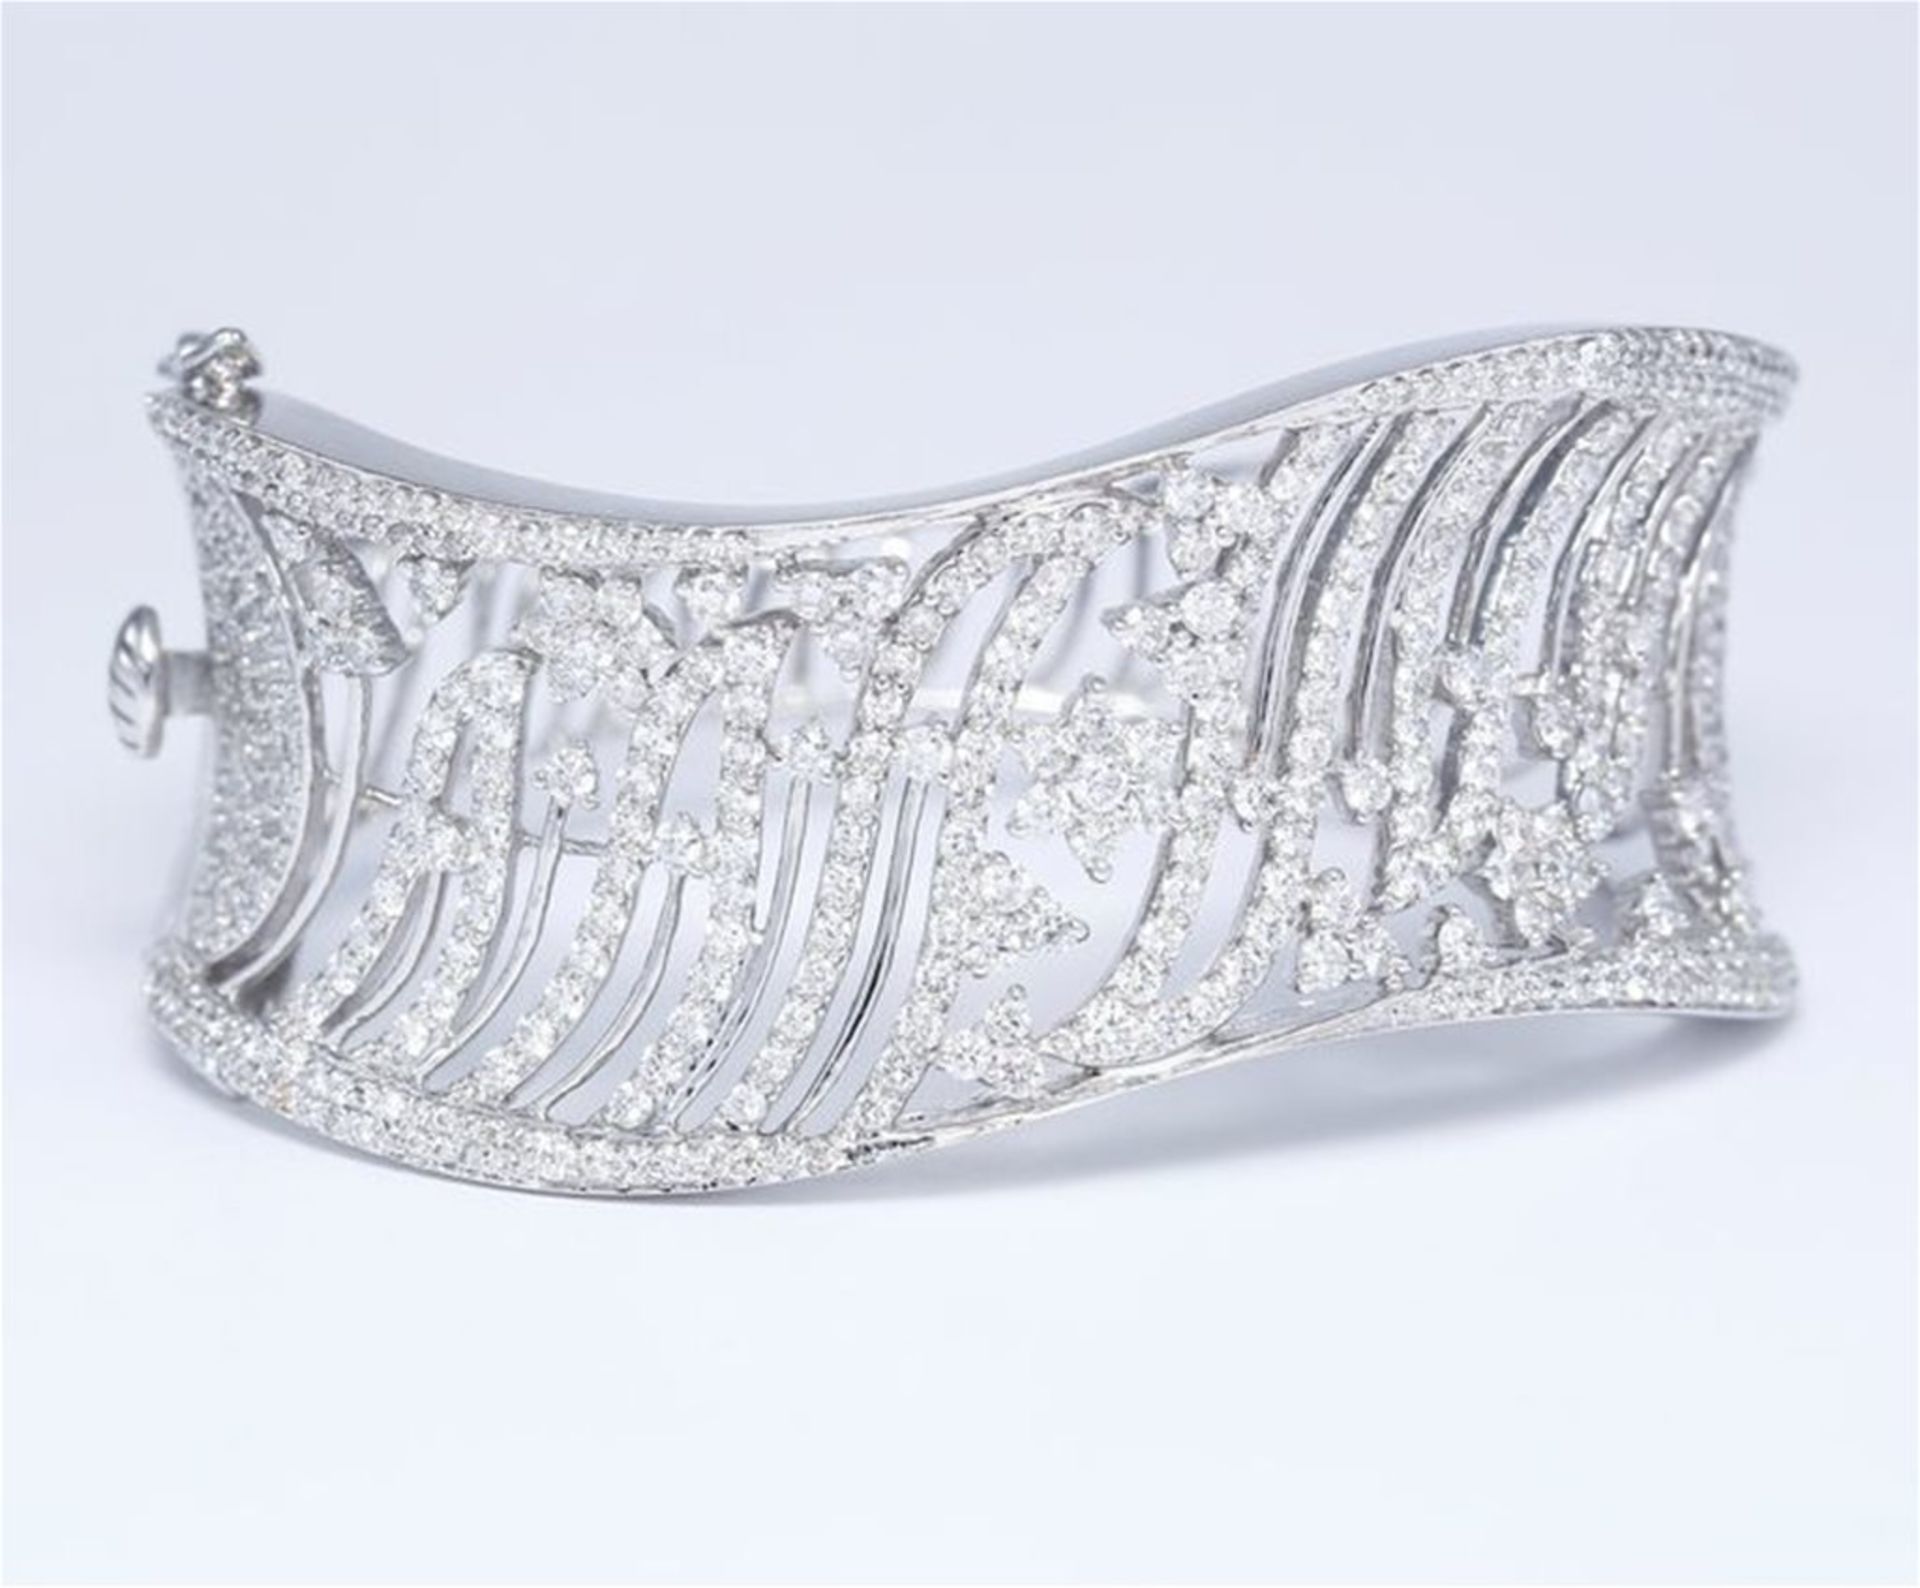 IGI Certified 14 K / 585 White Gold Designer Diamond Bracelet - Image 5 of 10